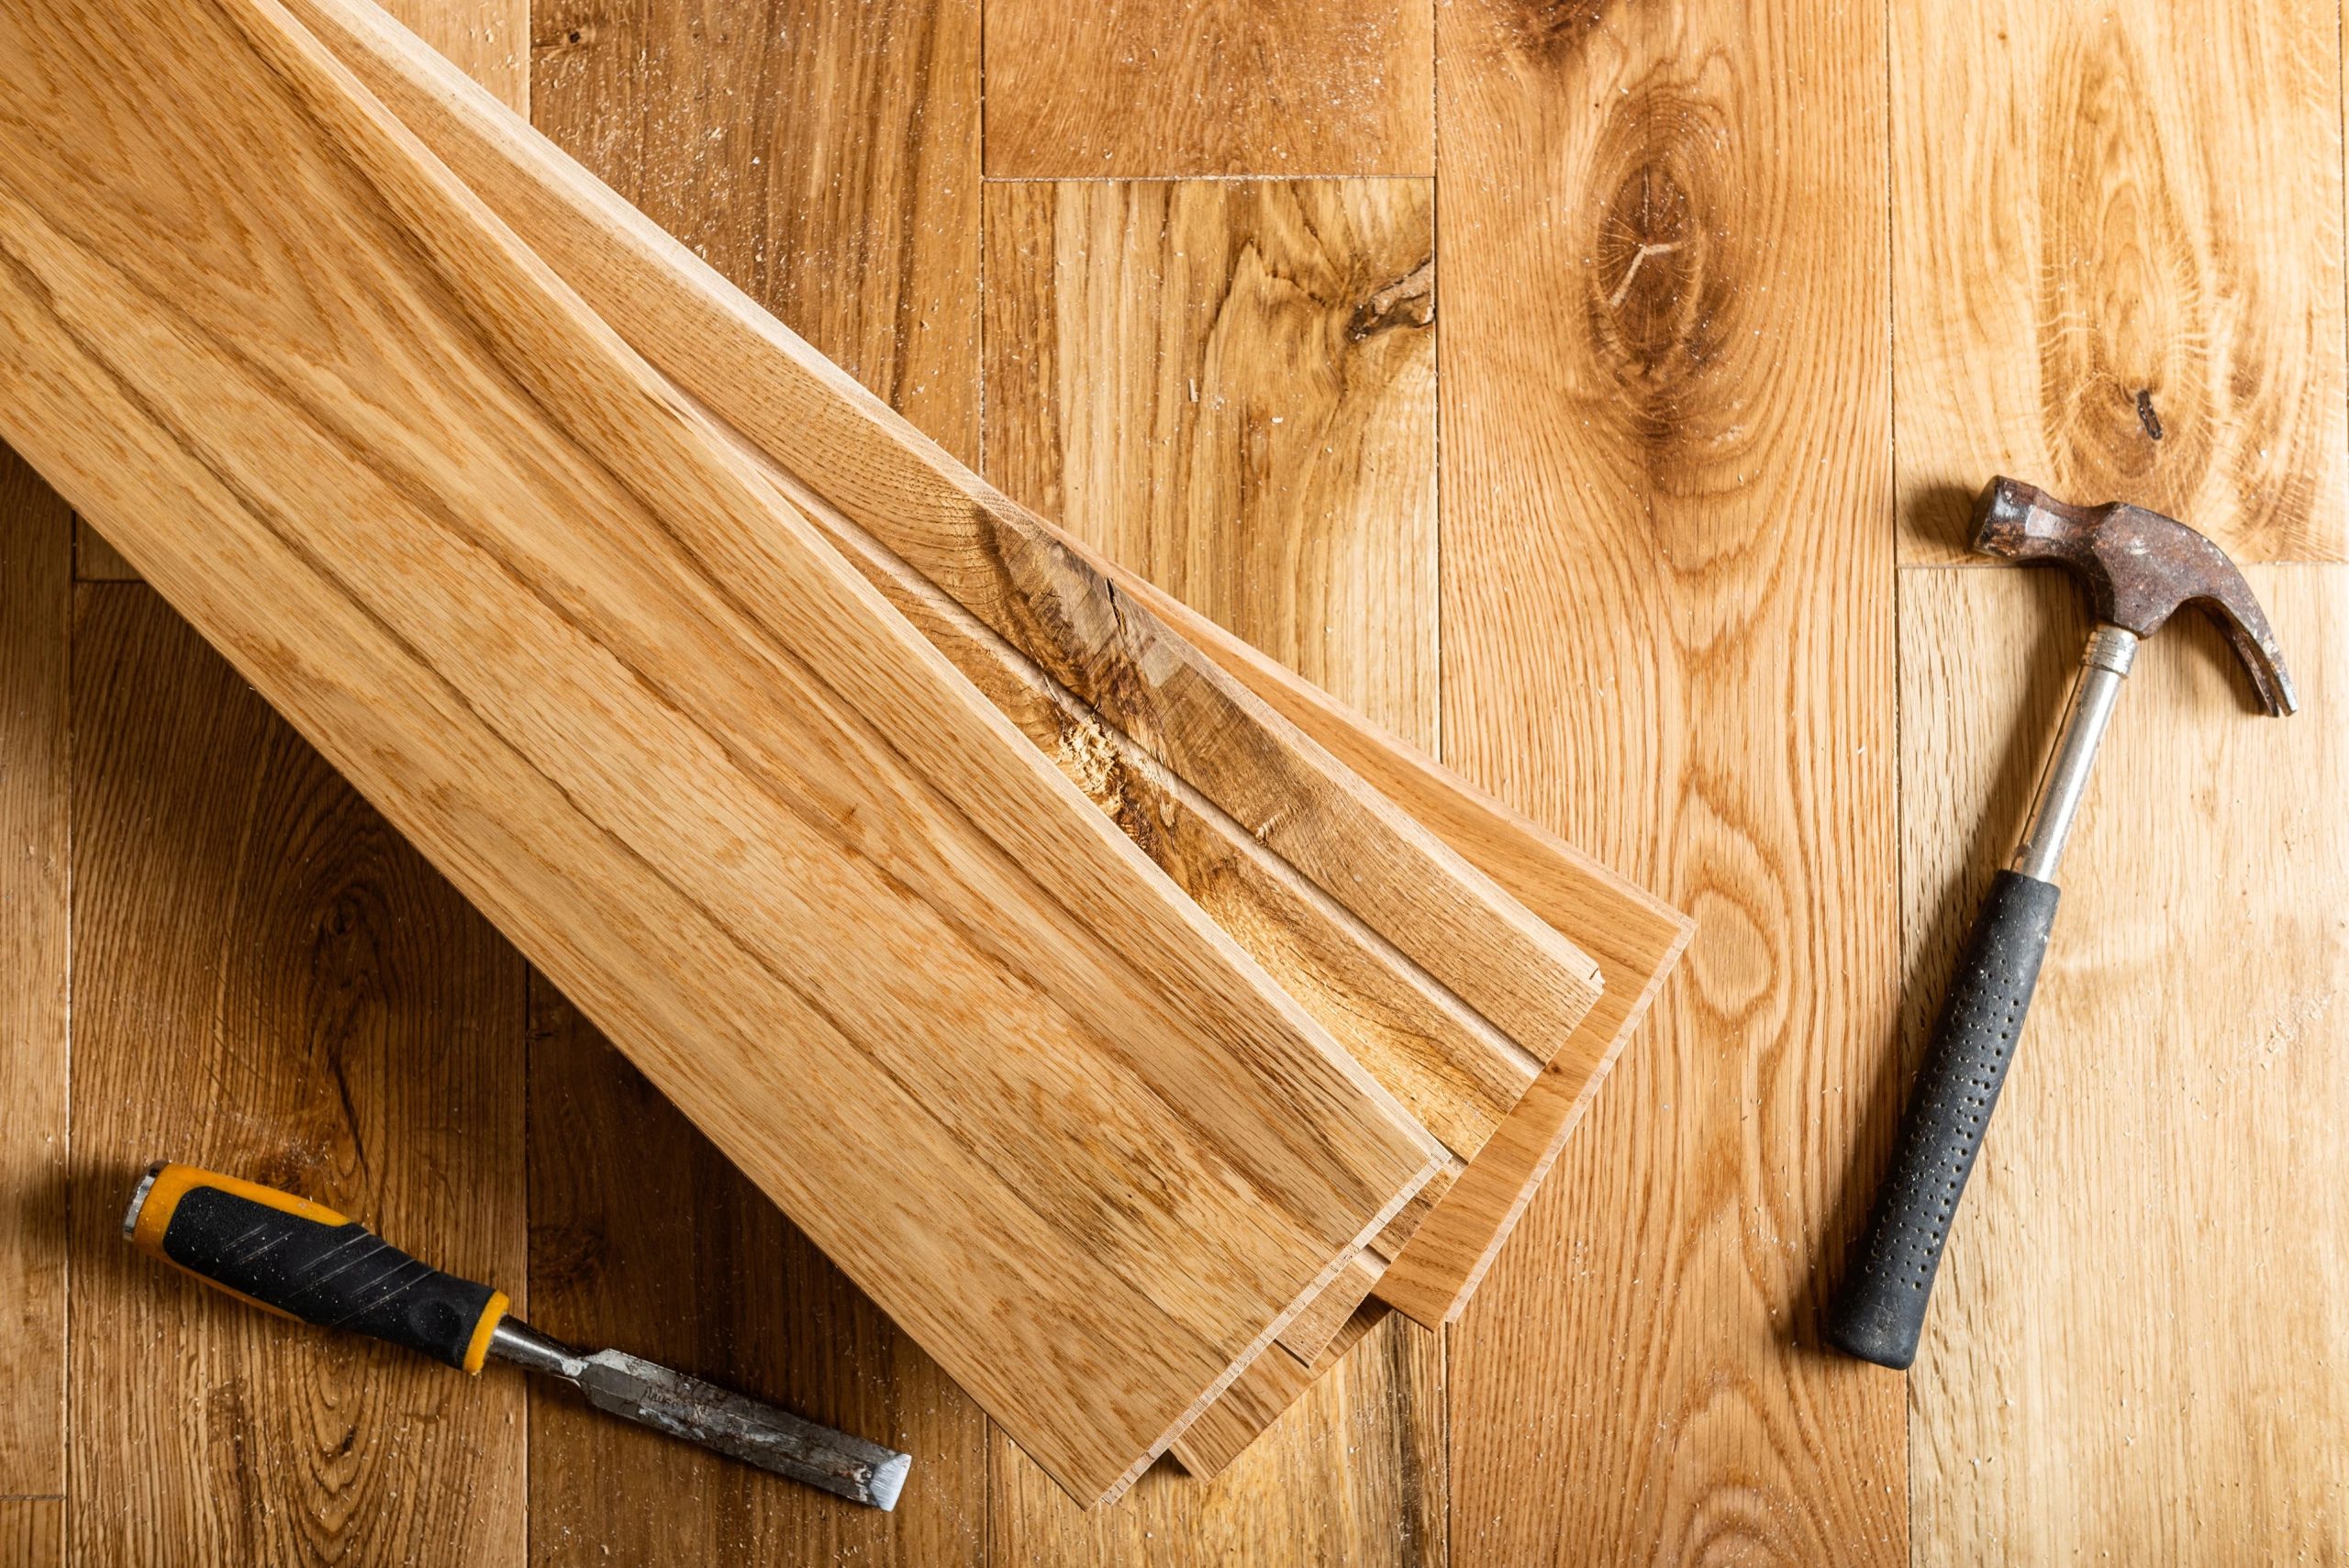 Stylish Design Tips for Decorating With Hardwood Flooring